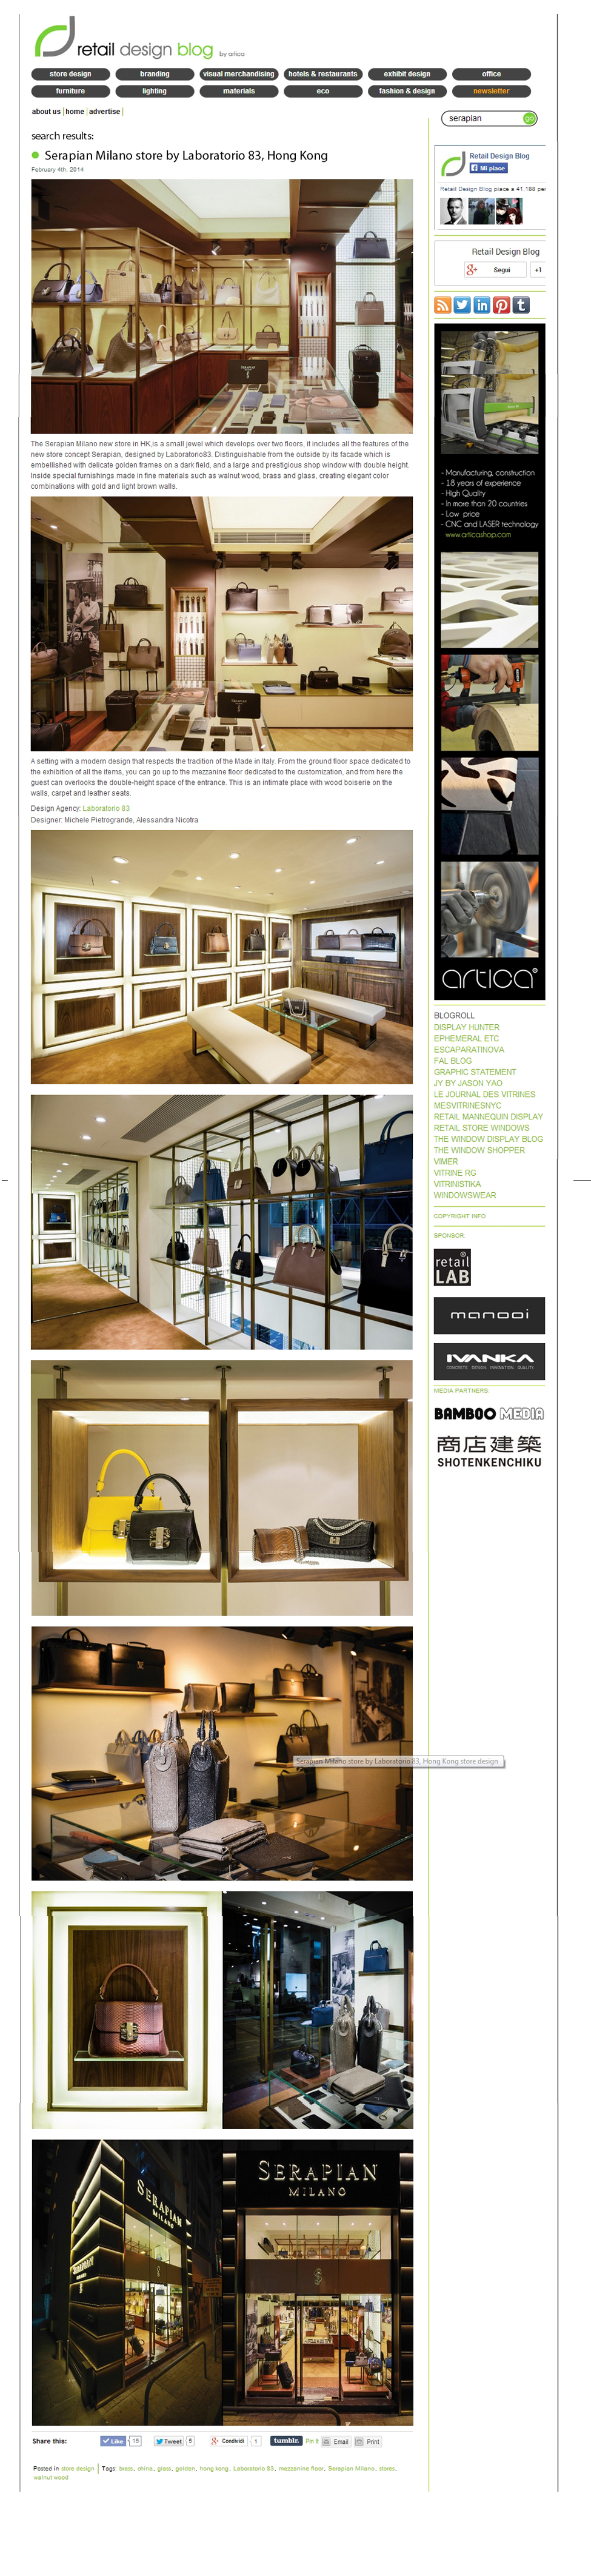 retaildesignblog_laboratorio83_hk